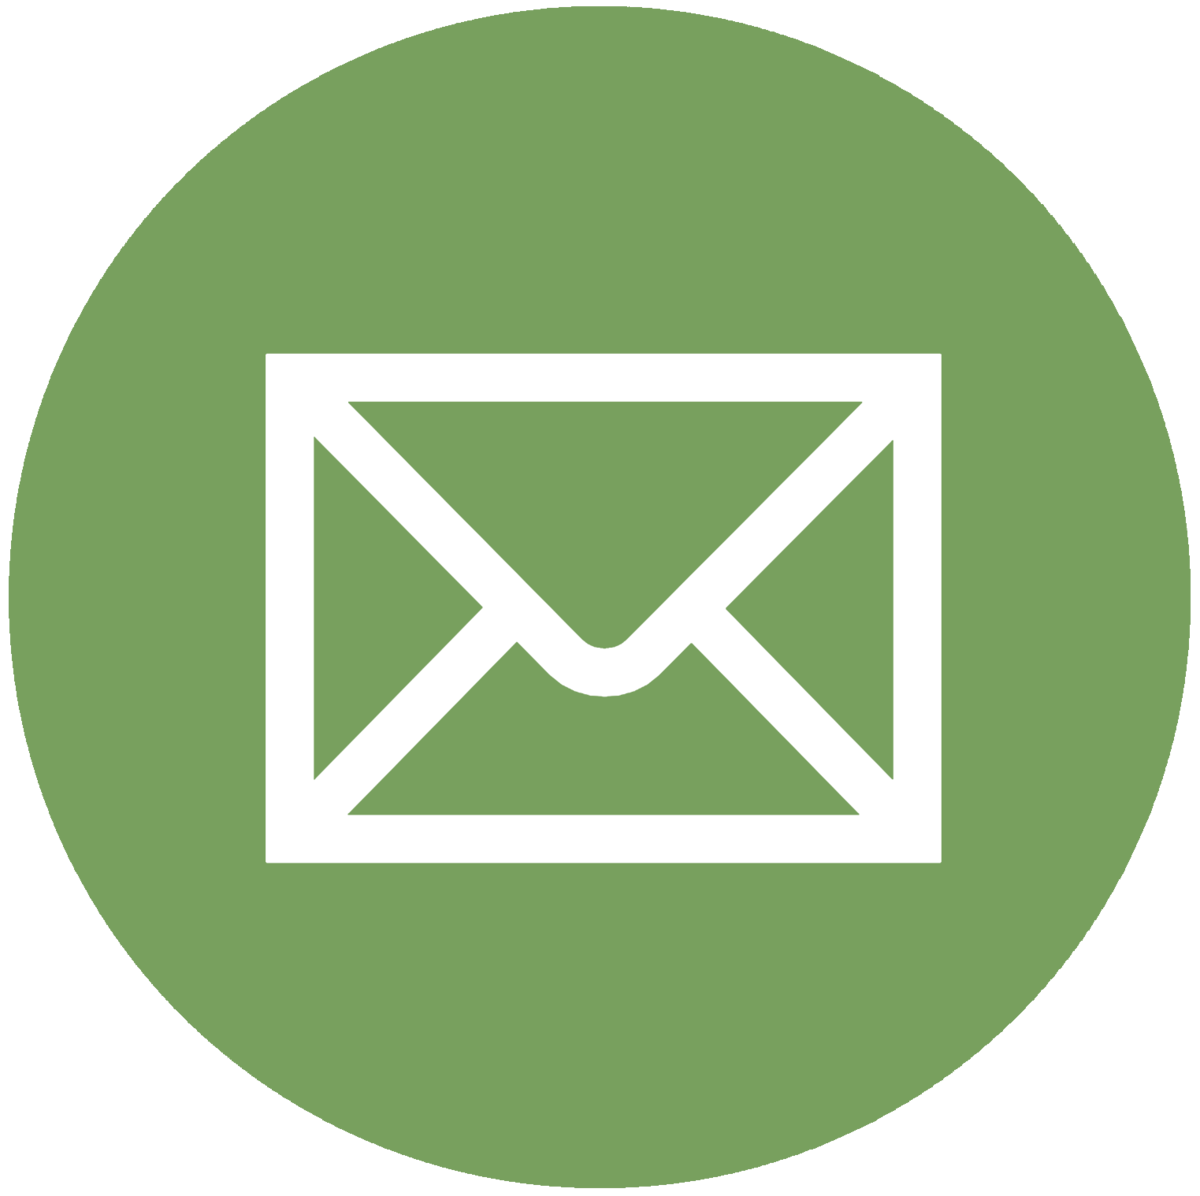 https://www.freepngimg.com/thumb/logo/64838-icons-symbol-envelope-computer-mail-logo-email.png